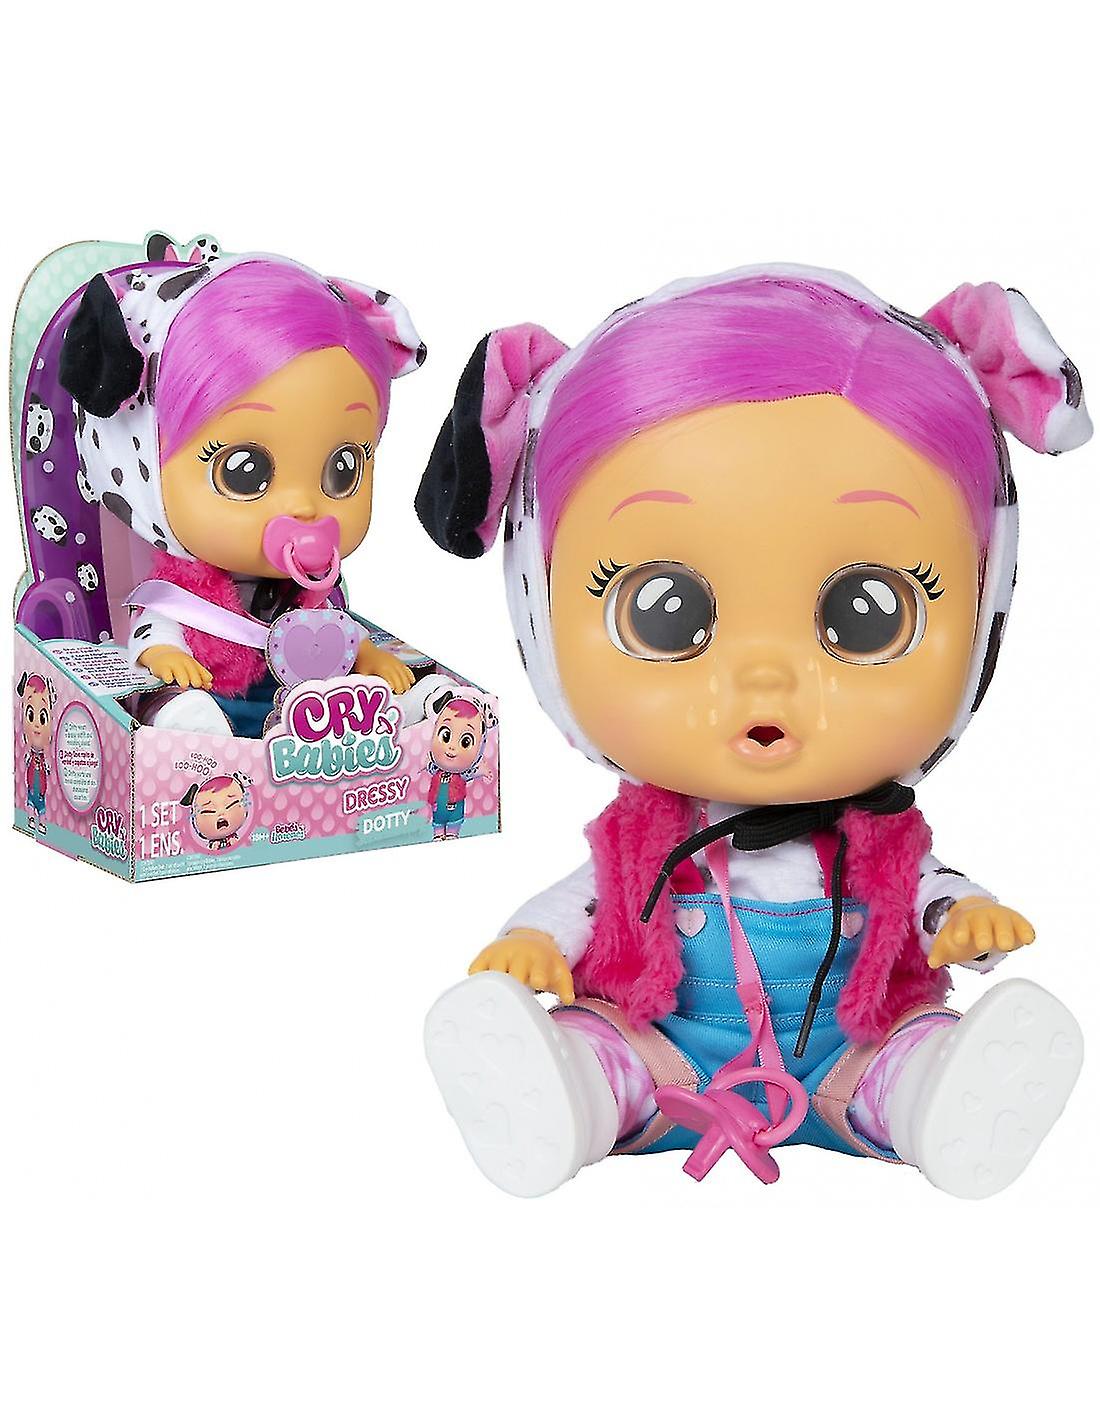 Cry Babies Dressy Dotty Doll